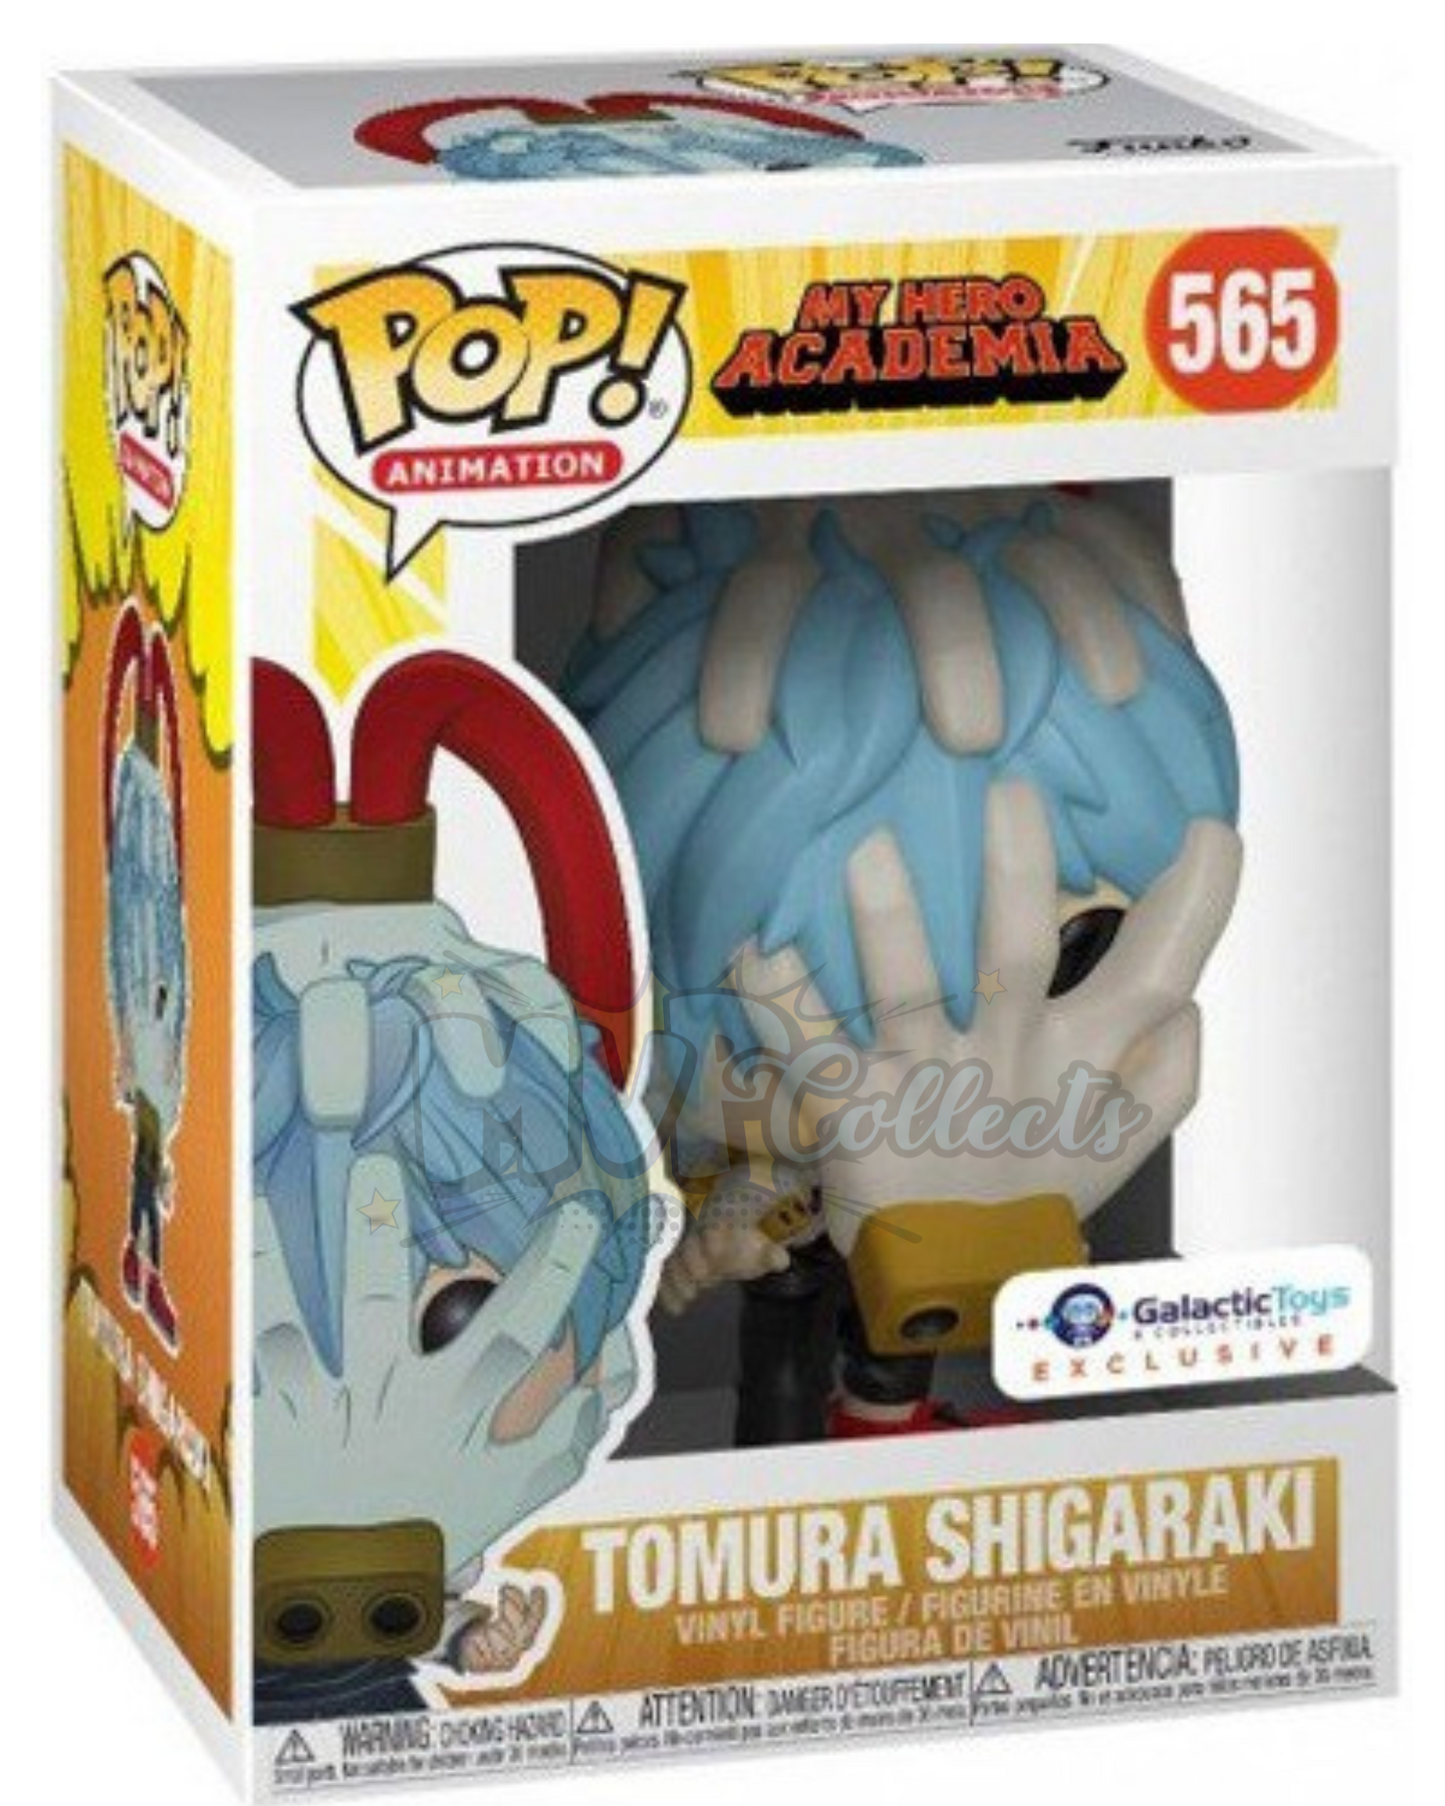 Tomura Shigaraki POP! (My Hero Academia) 565 Galactic Toys Sticker